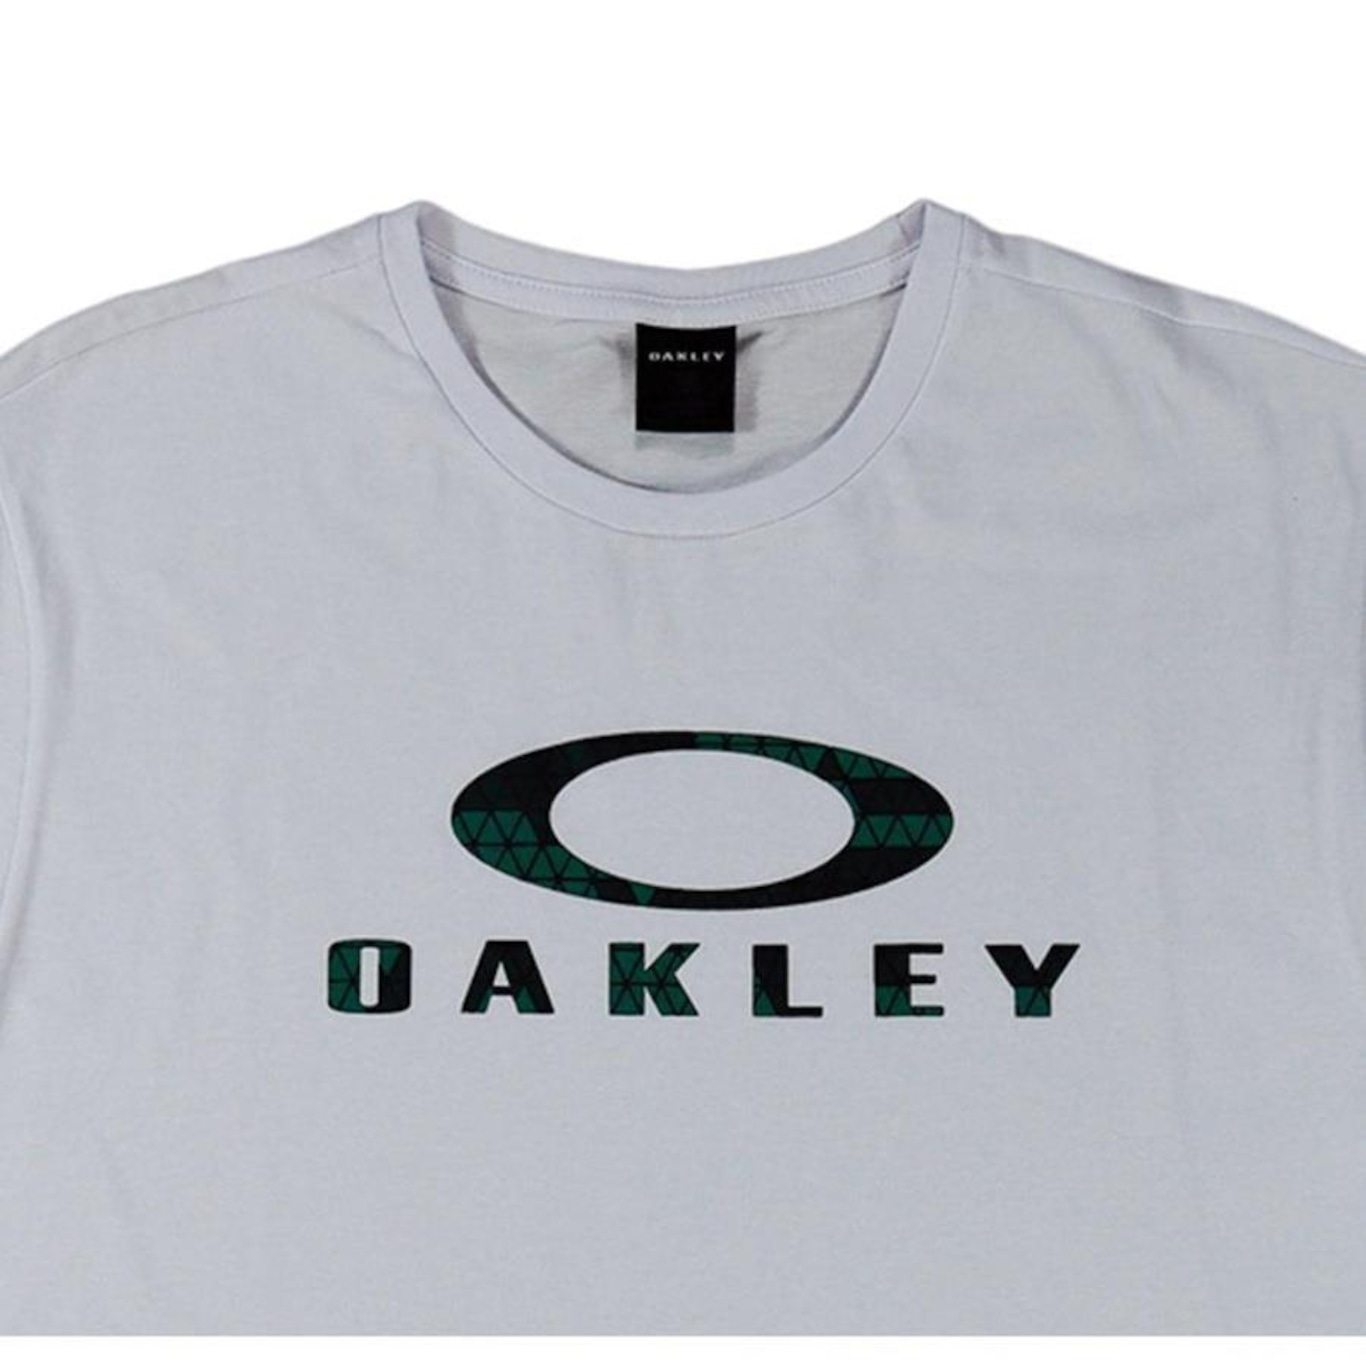 Camiseta Oakley Back to Skull Tee Caveira Original - Creme